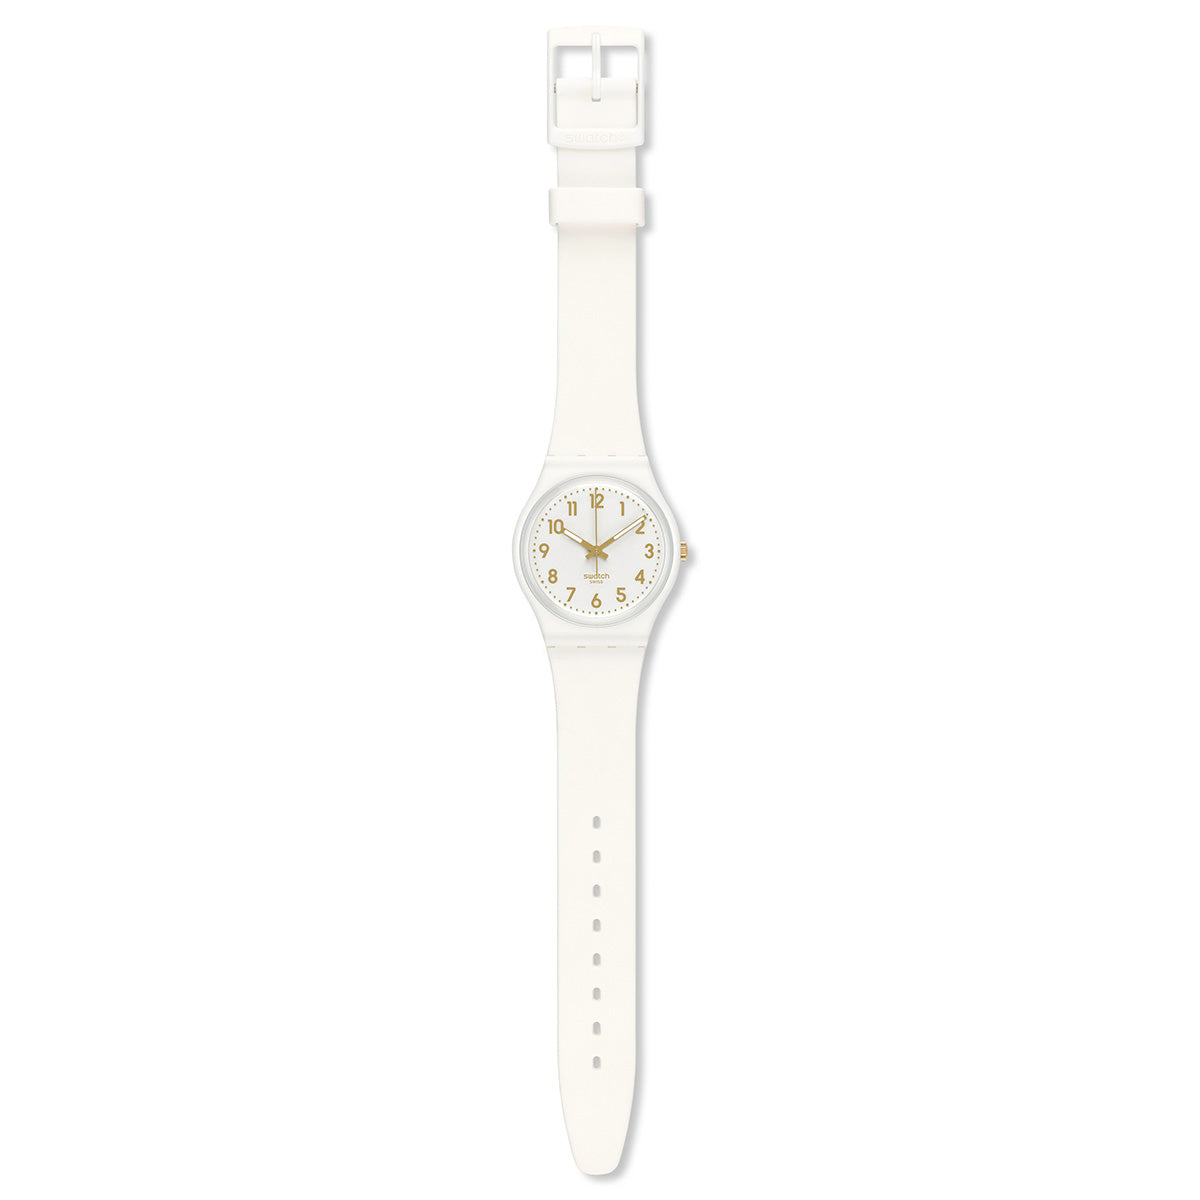 swatch スウォッチ 腕時計 メンズ レディース オリジナルズ ジェント ホワイト・ビショップ Originals Gent WHITE BISHOP GW164